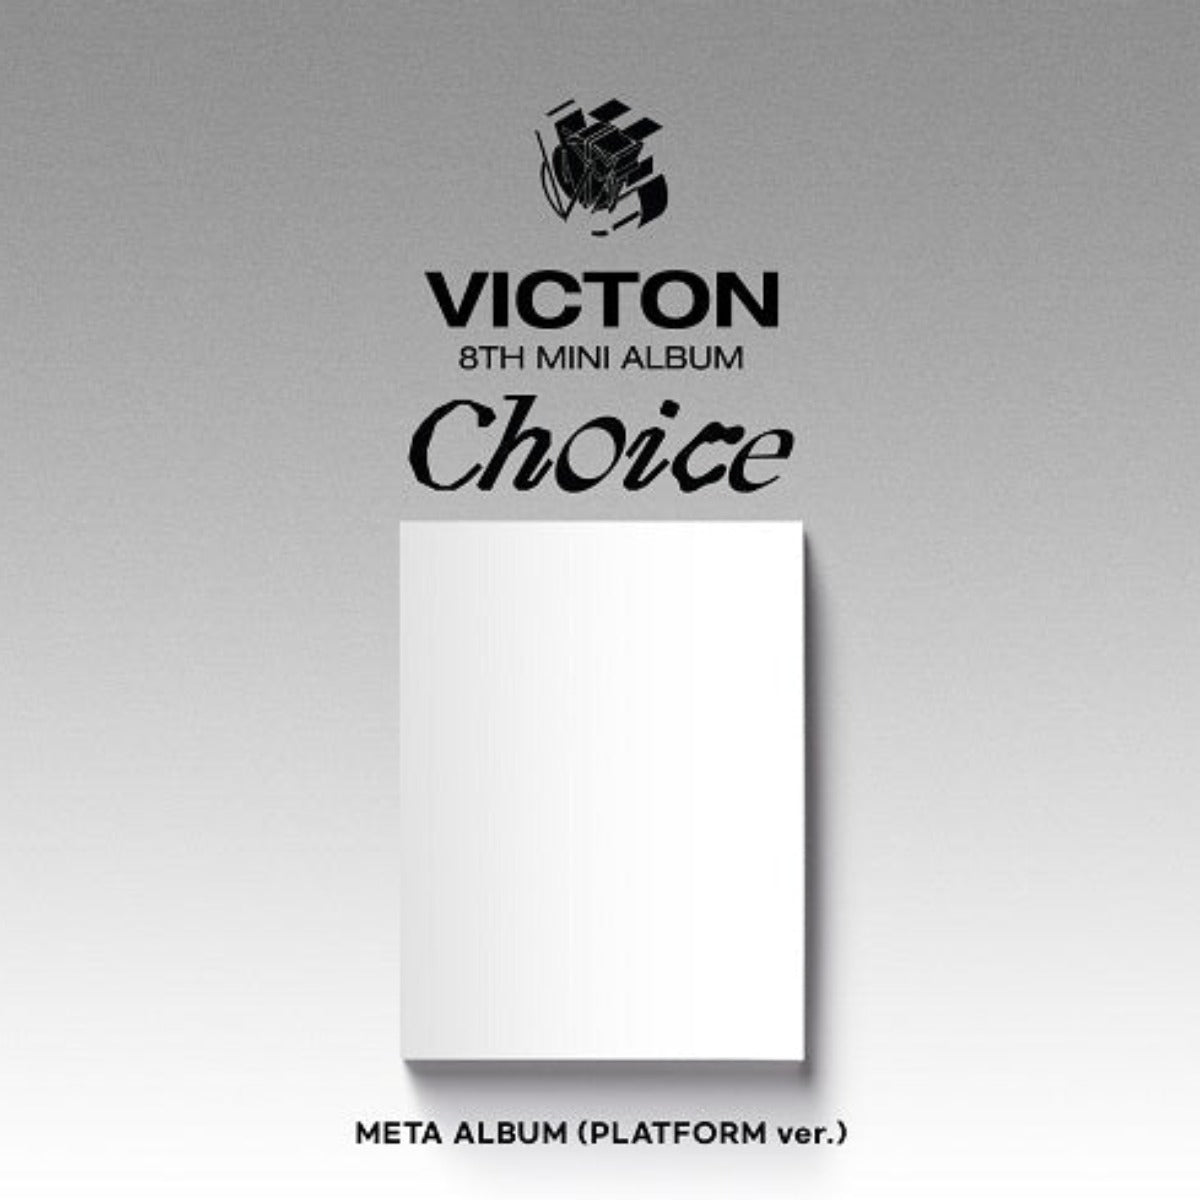 VICTON Mini Album Vol. 8 - Choice (Platform Version)